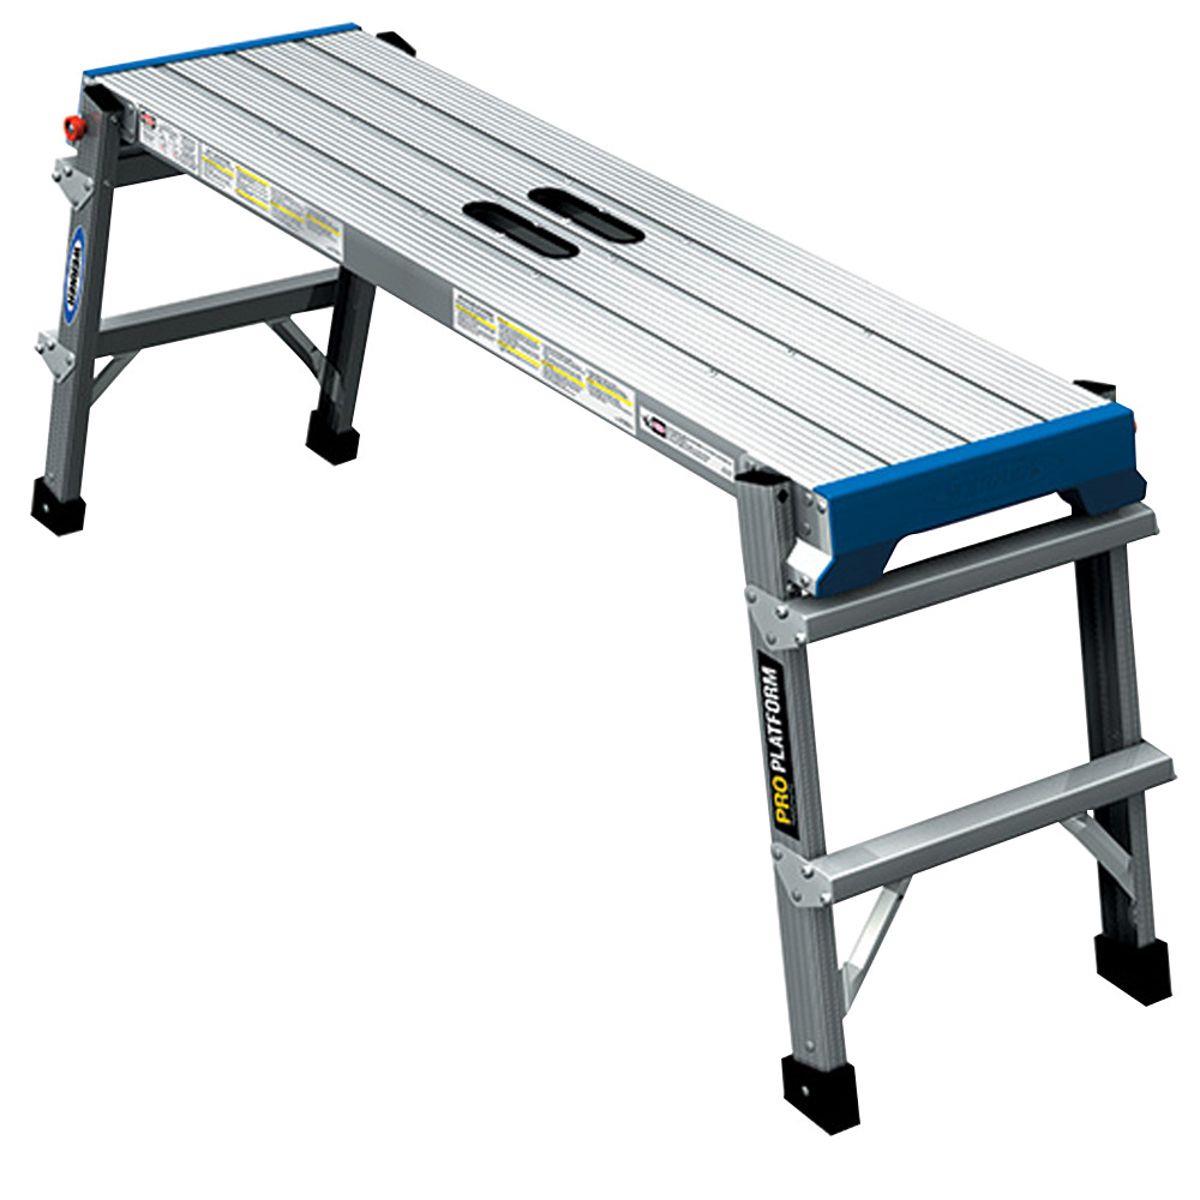 Werner 79025 Pro Work Platform; Foldaway Workstand (Hop Up); Aluminium; 1150 x 300mm Platform; 510mm High; Maximum Load 150Kg